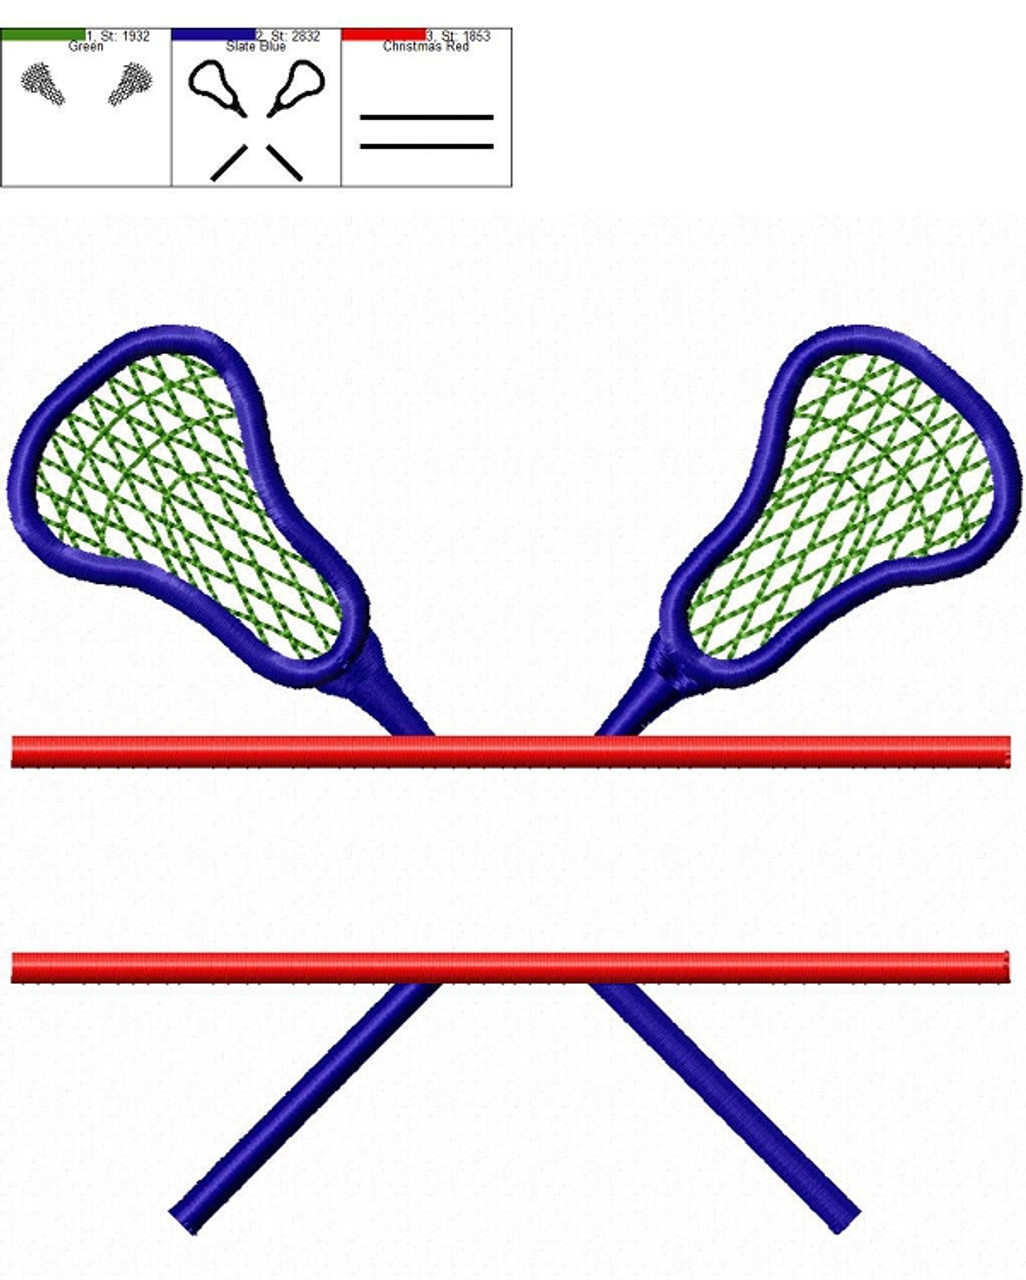 Art of Embroidery - Crossed Lacrosse Sticks